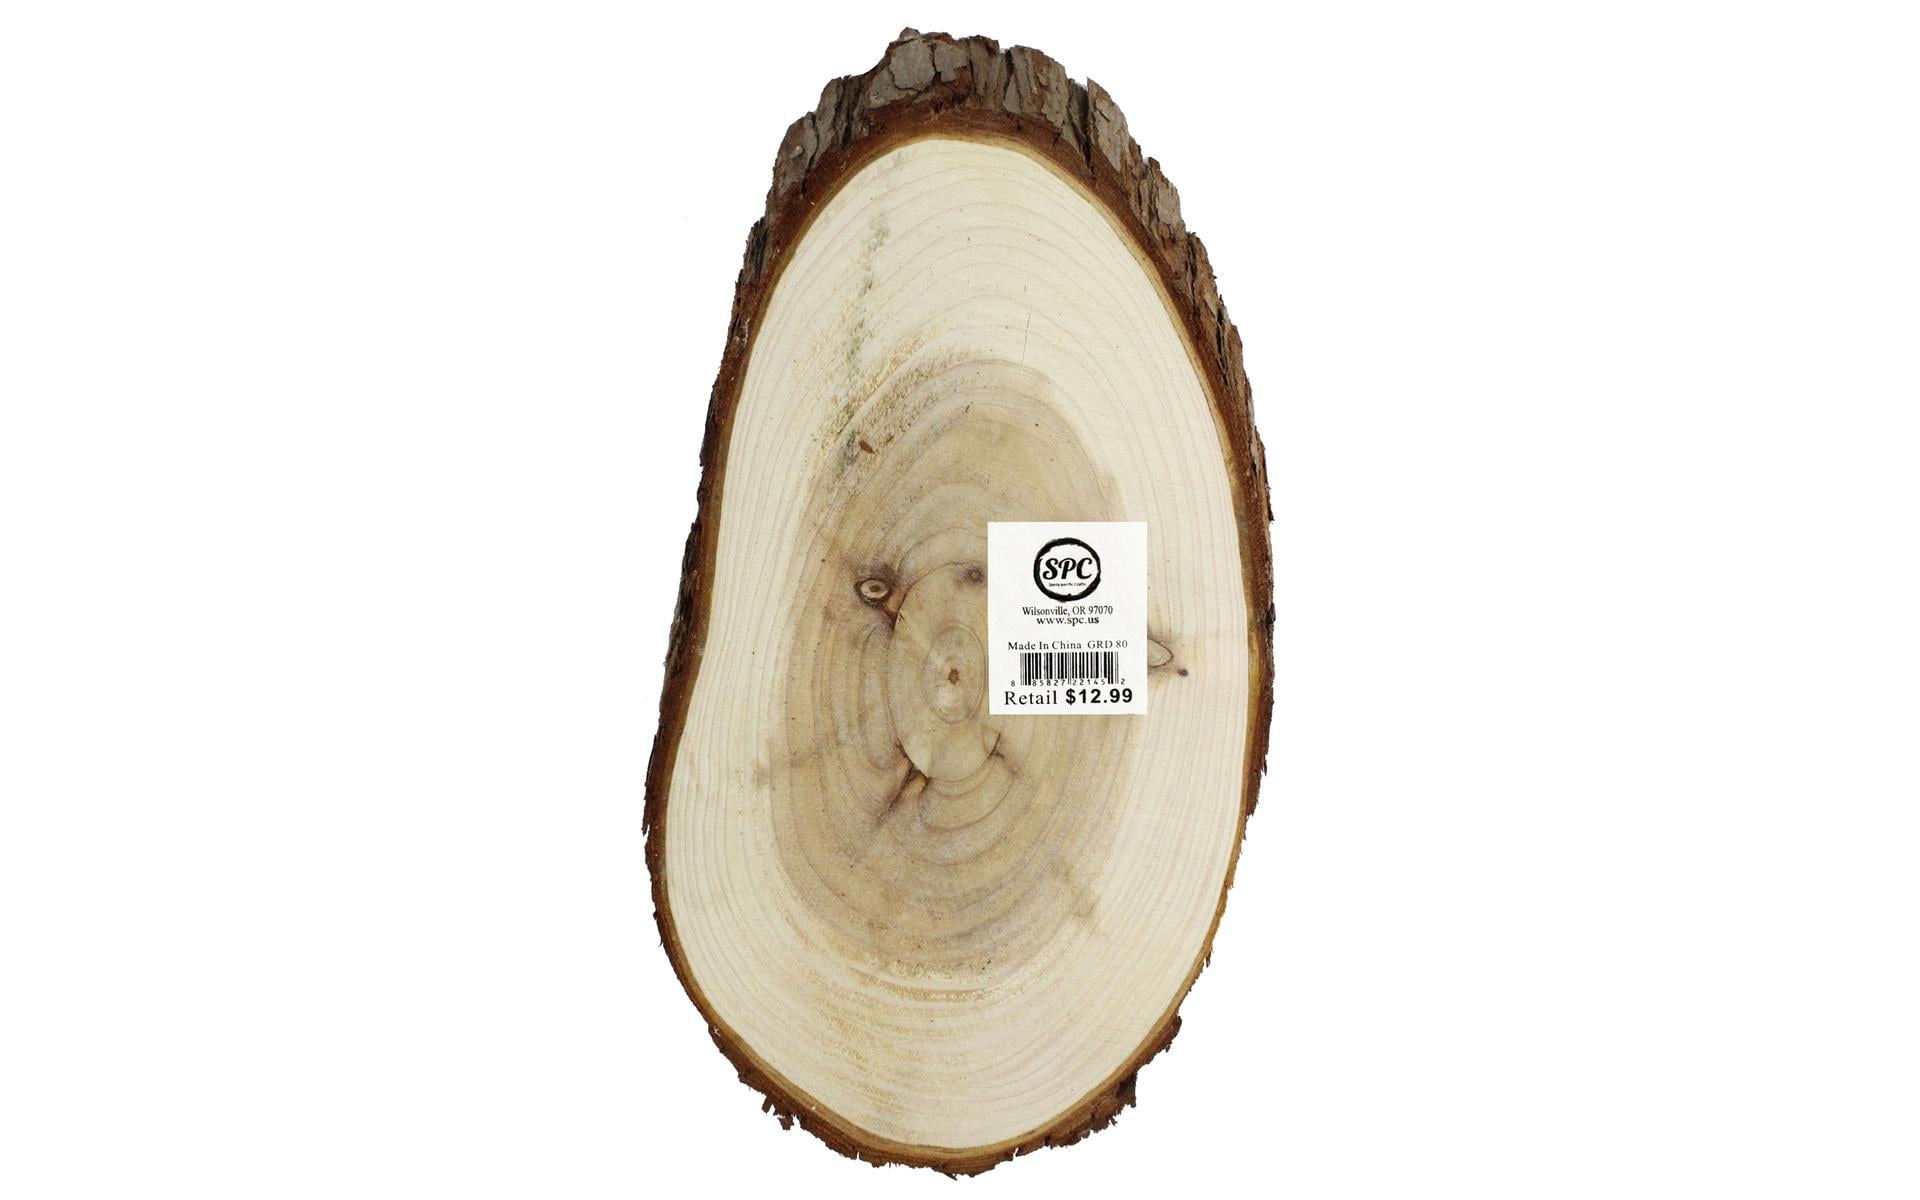 Cousin DIY Poplar 7 inch Round Rustic Wood Slice with Bark, 69993689